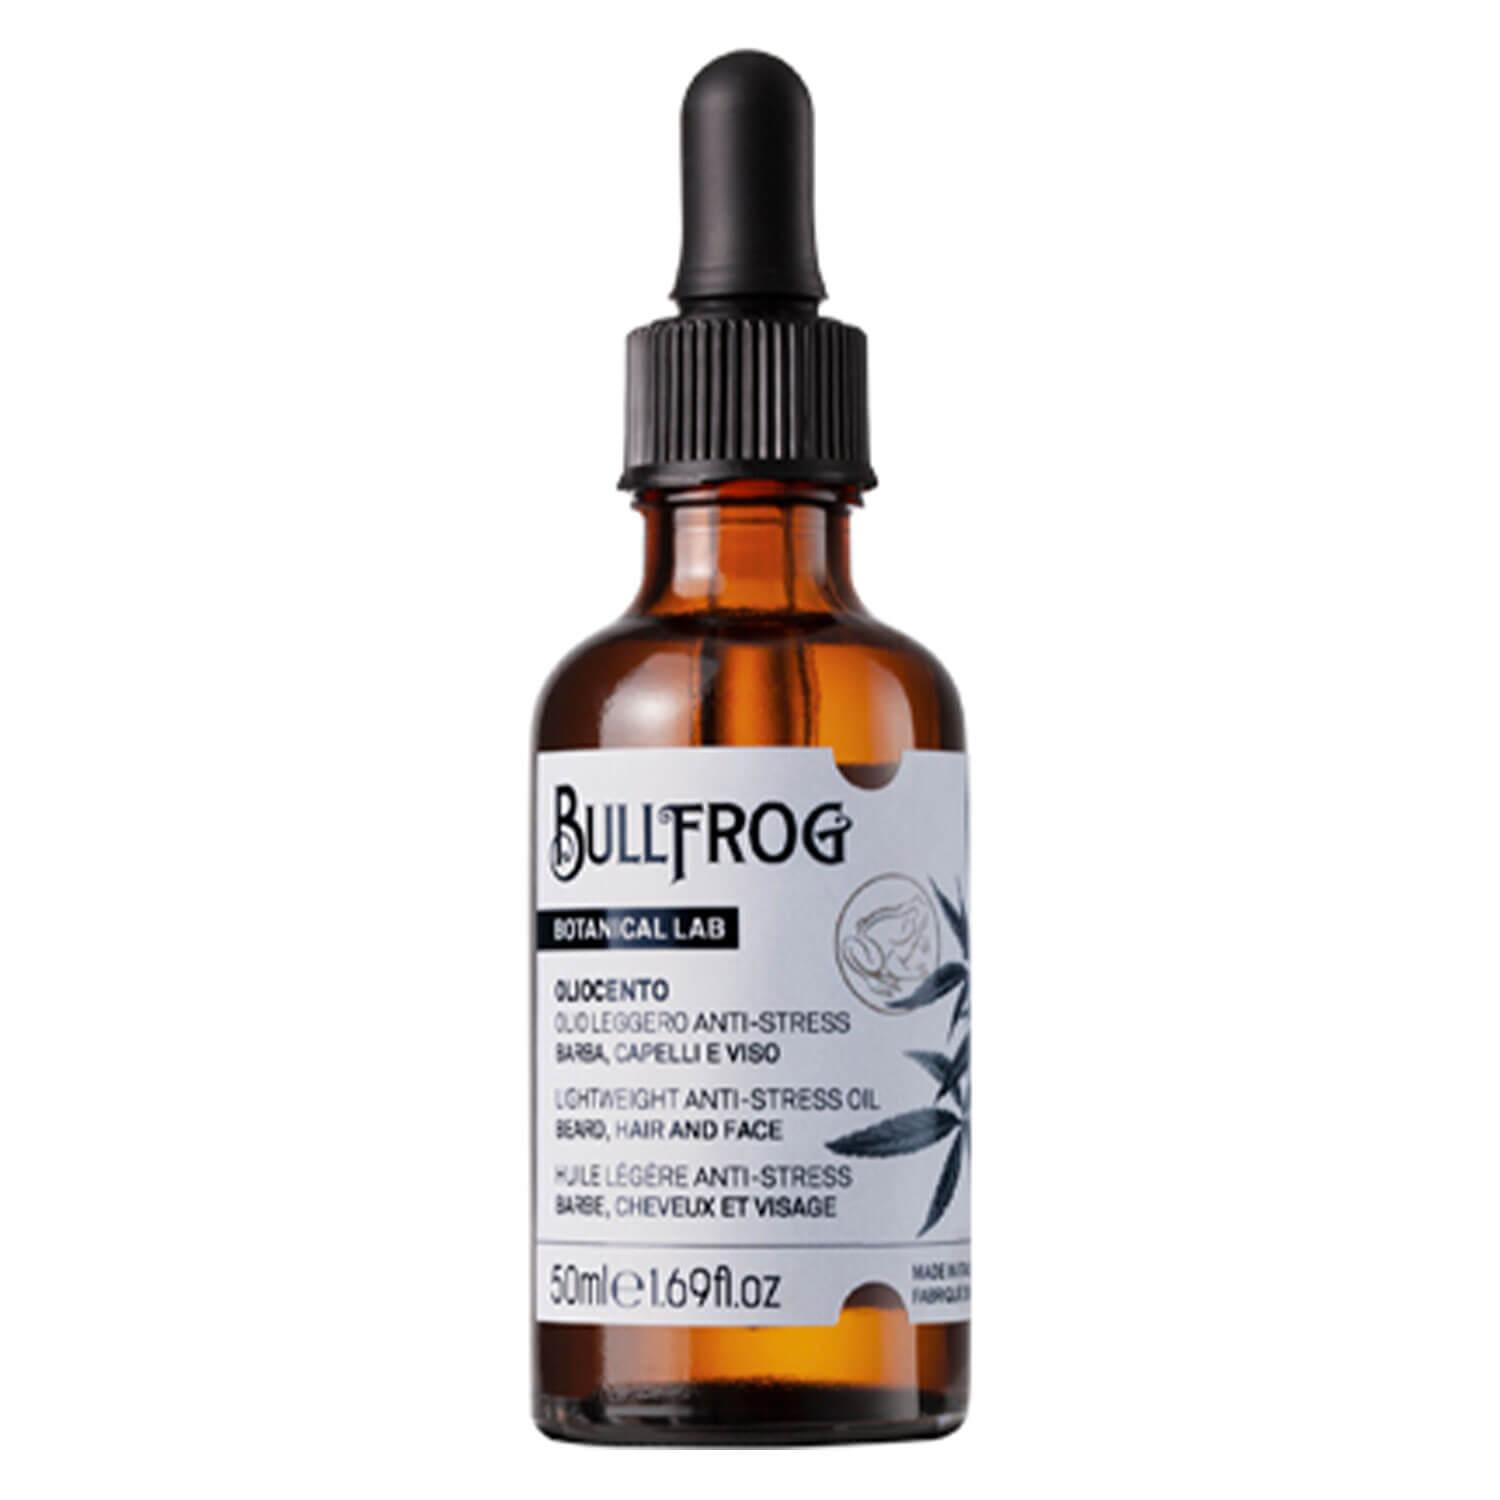 BULLFROG - Oliocento Lightweight Anti-Stress Oil